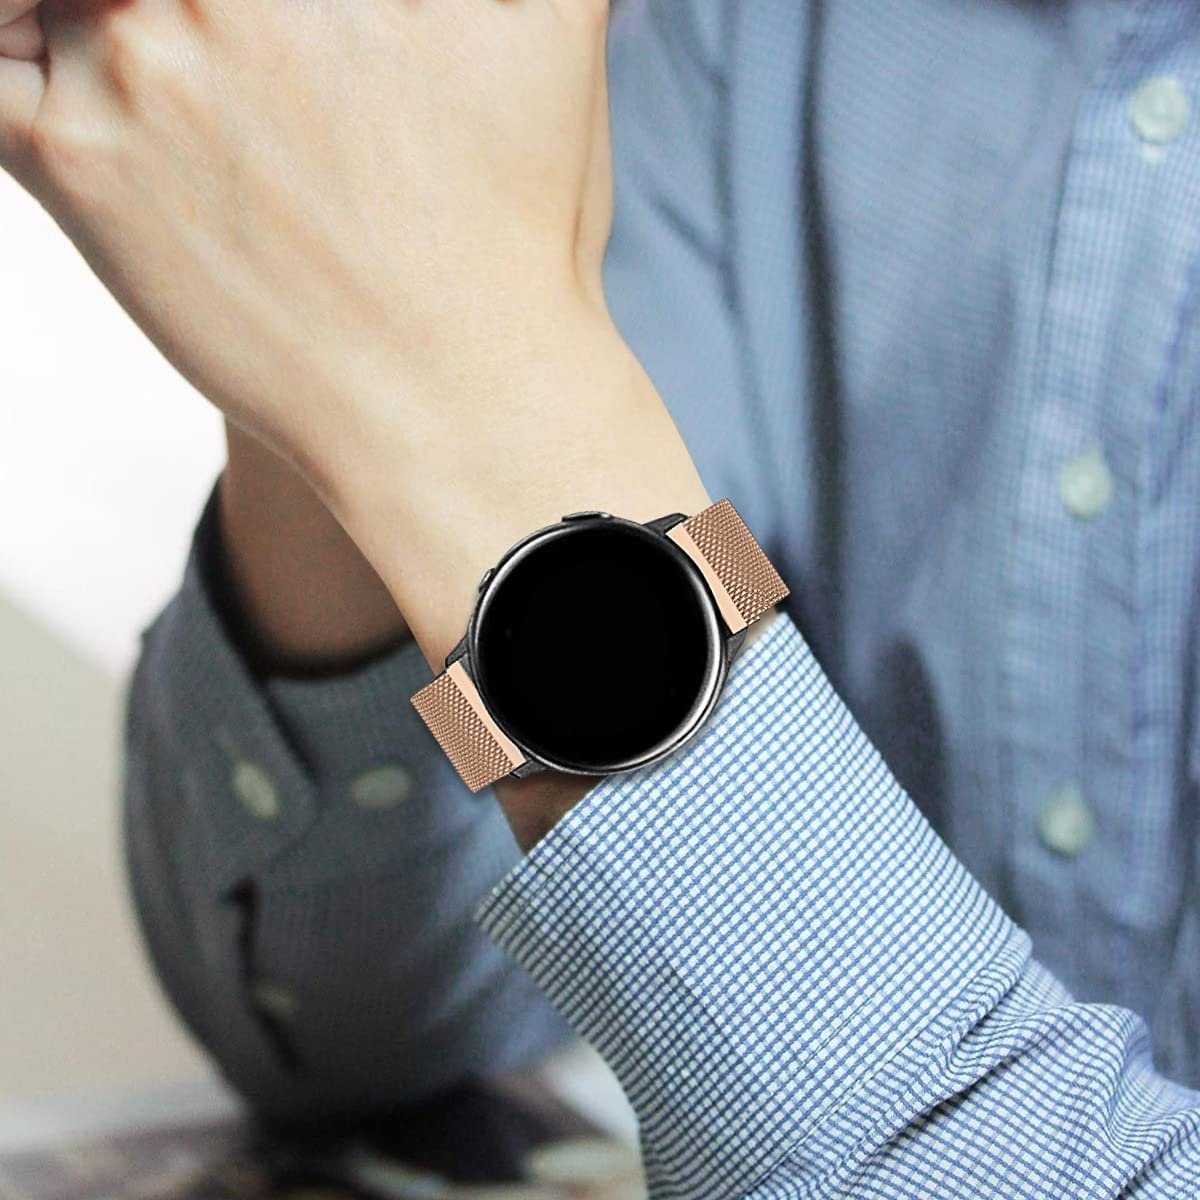 Metall für 3/Huawei Edelstahl GT(22mm) Huawei Armband ELEKIN Watch Watch Mesh Smartwatch-Armband